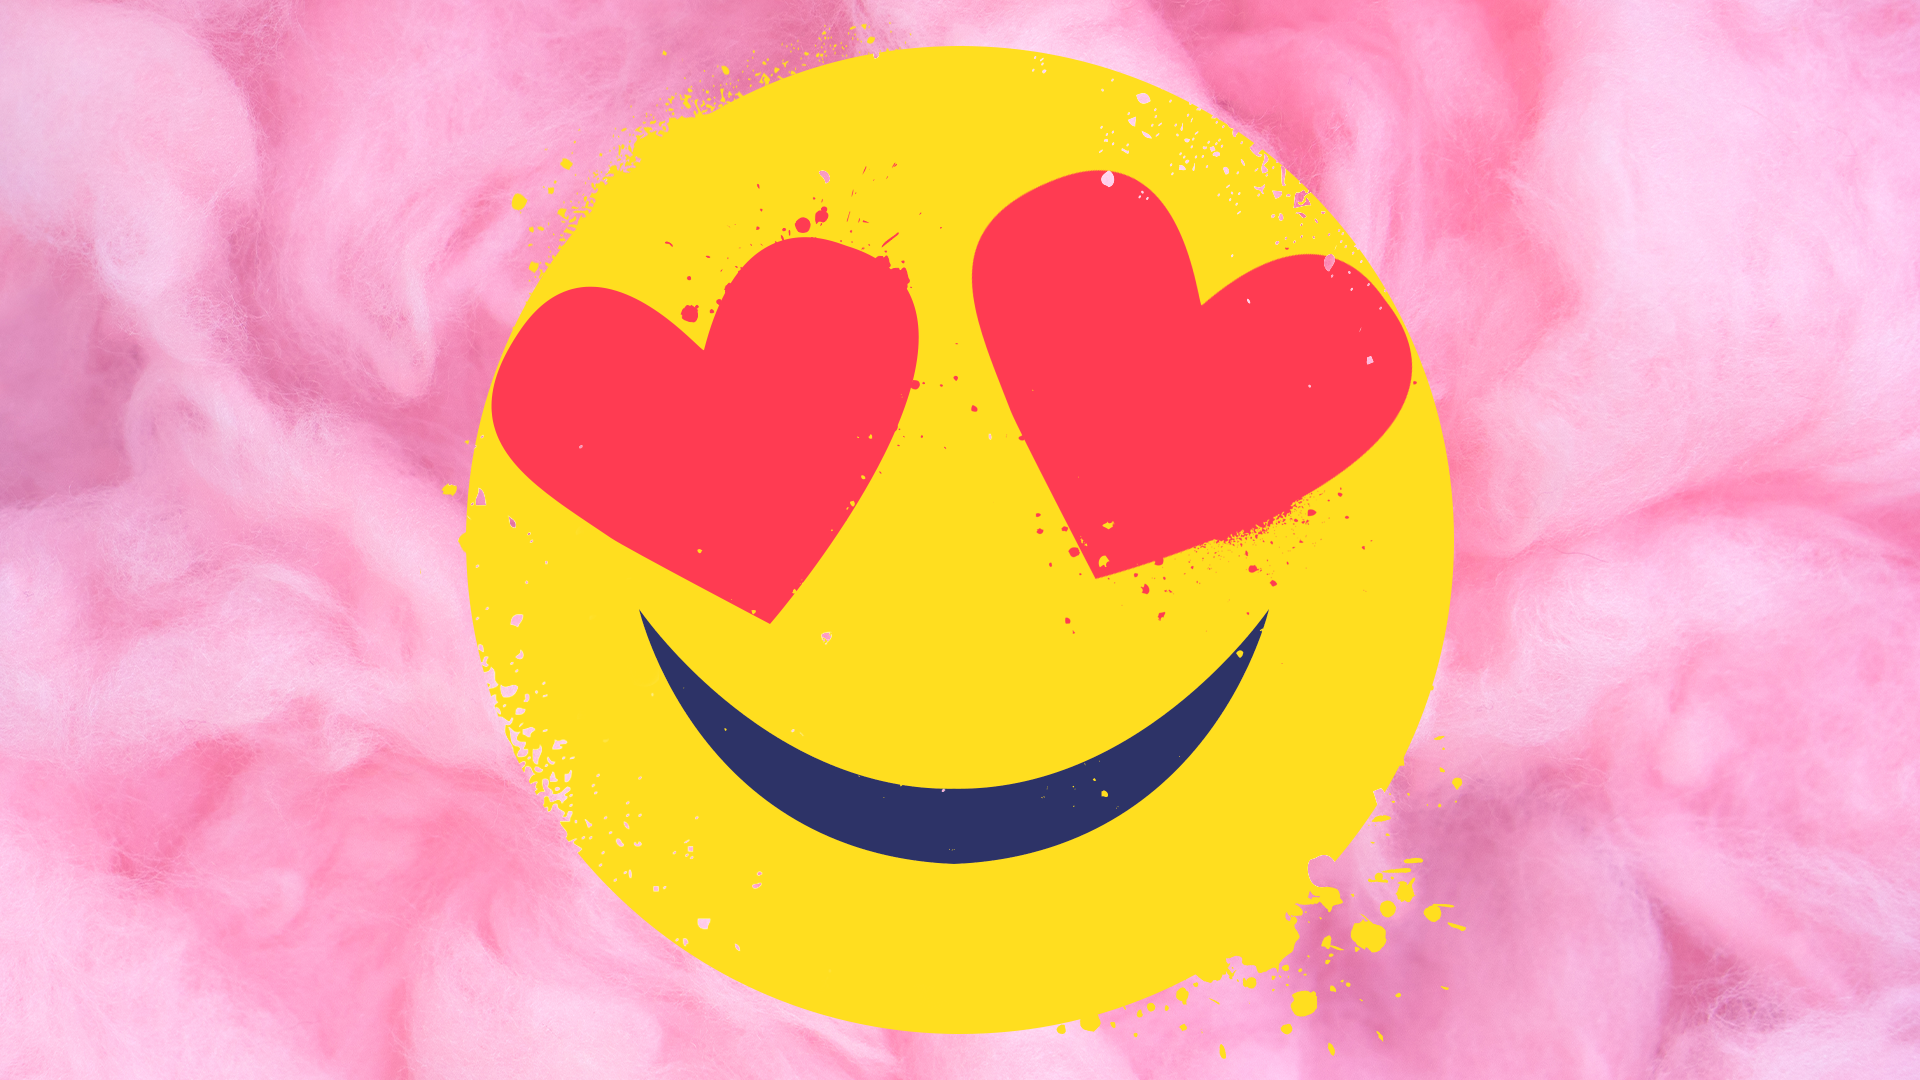 Heart eyes emoji on candyfloss background